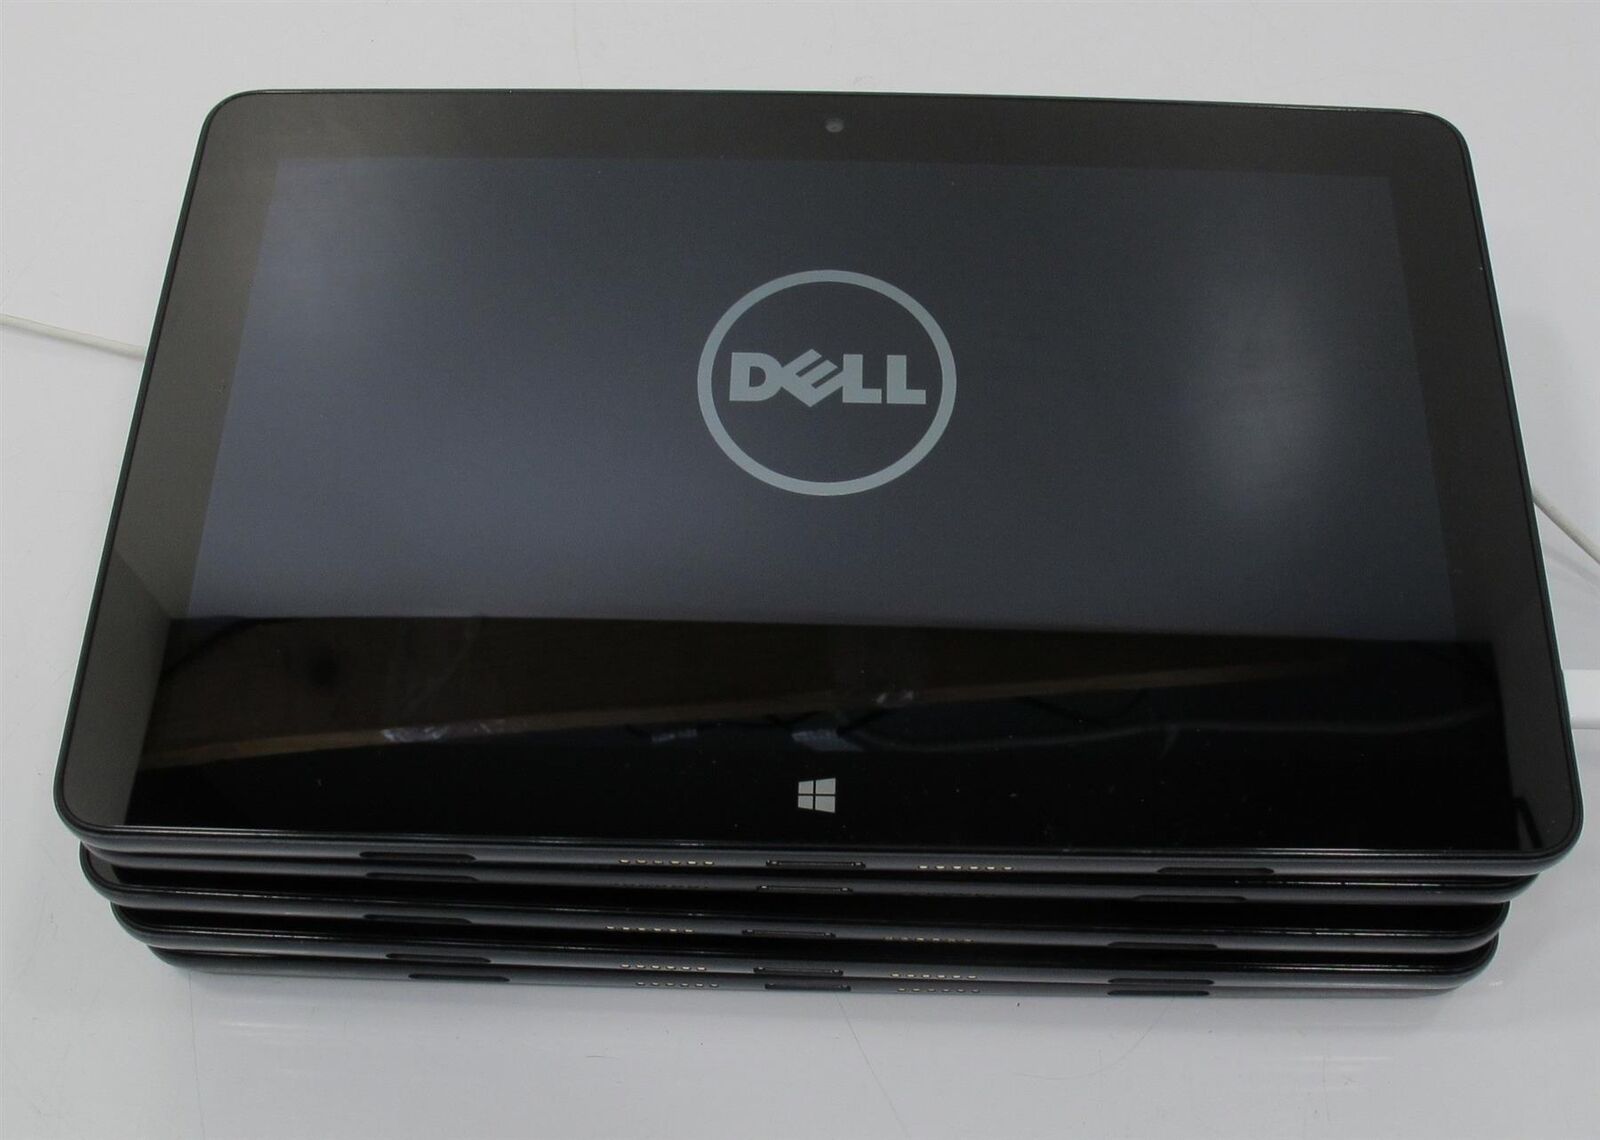 Lot 5 Dell Venue 11 Pro 7139 Core i5-4300y 1.60GHz 8GB Tablet Locked - Read